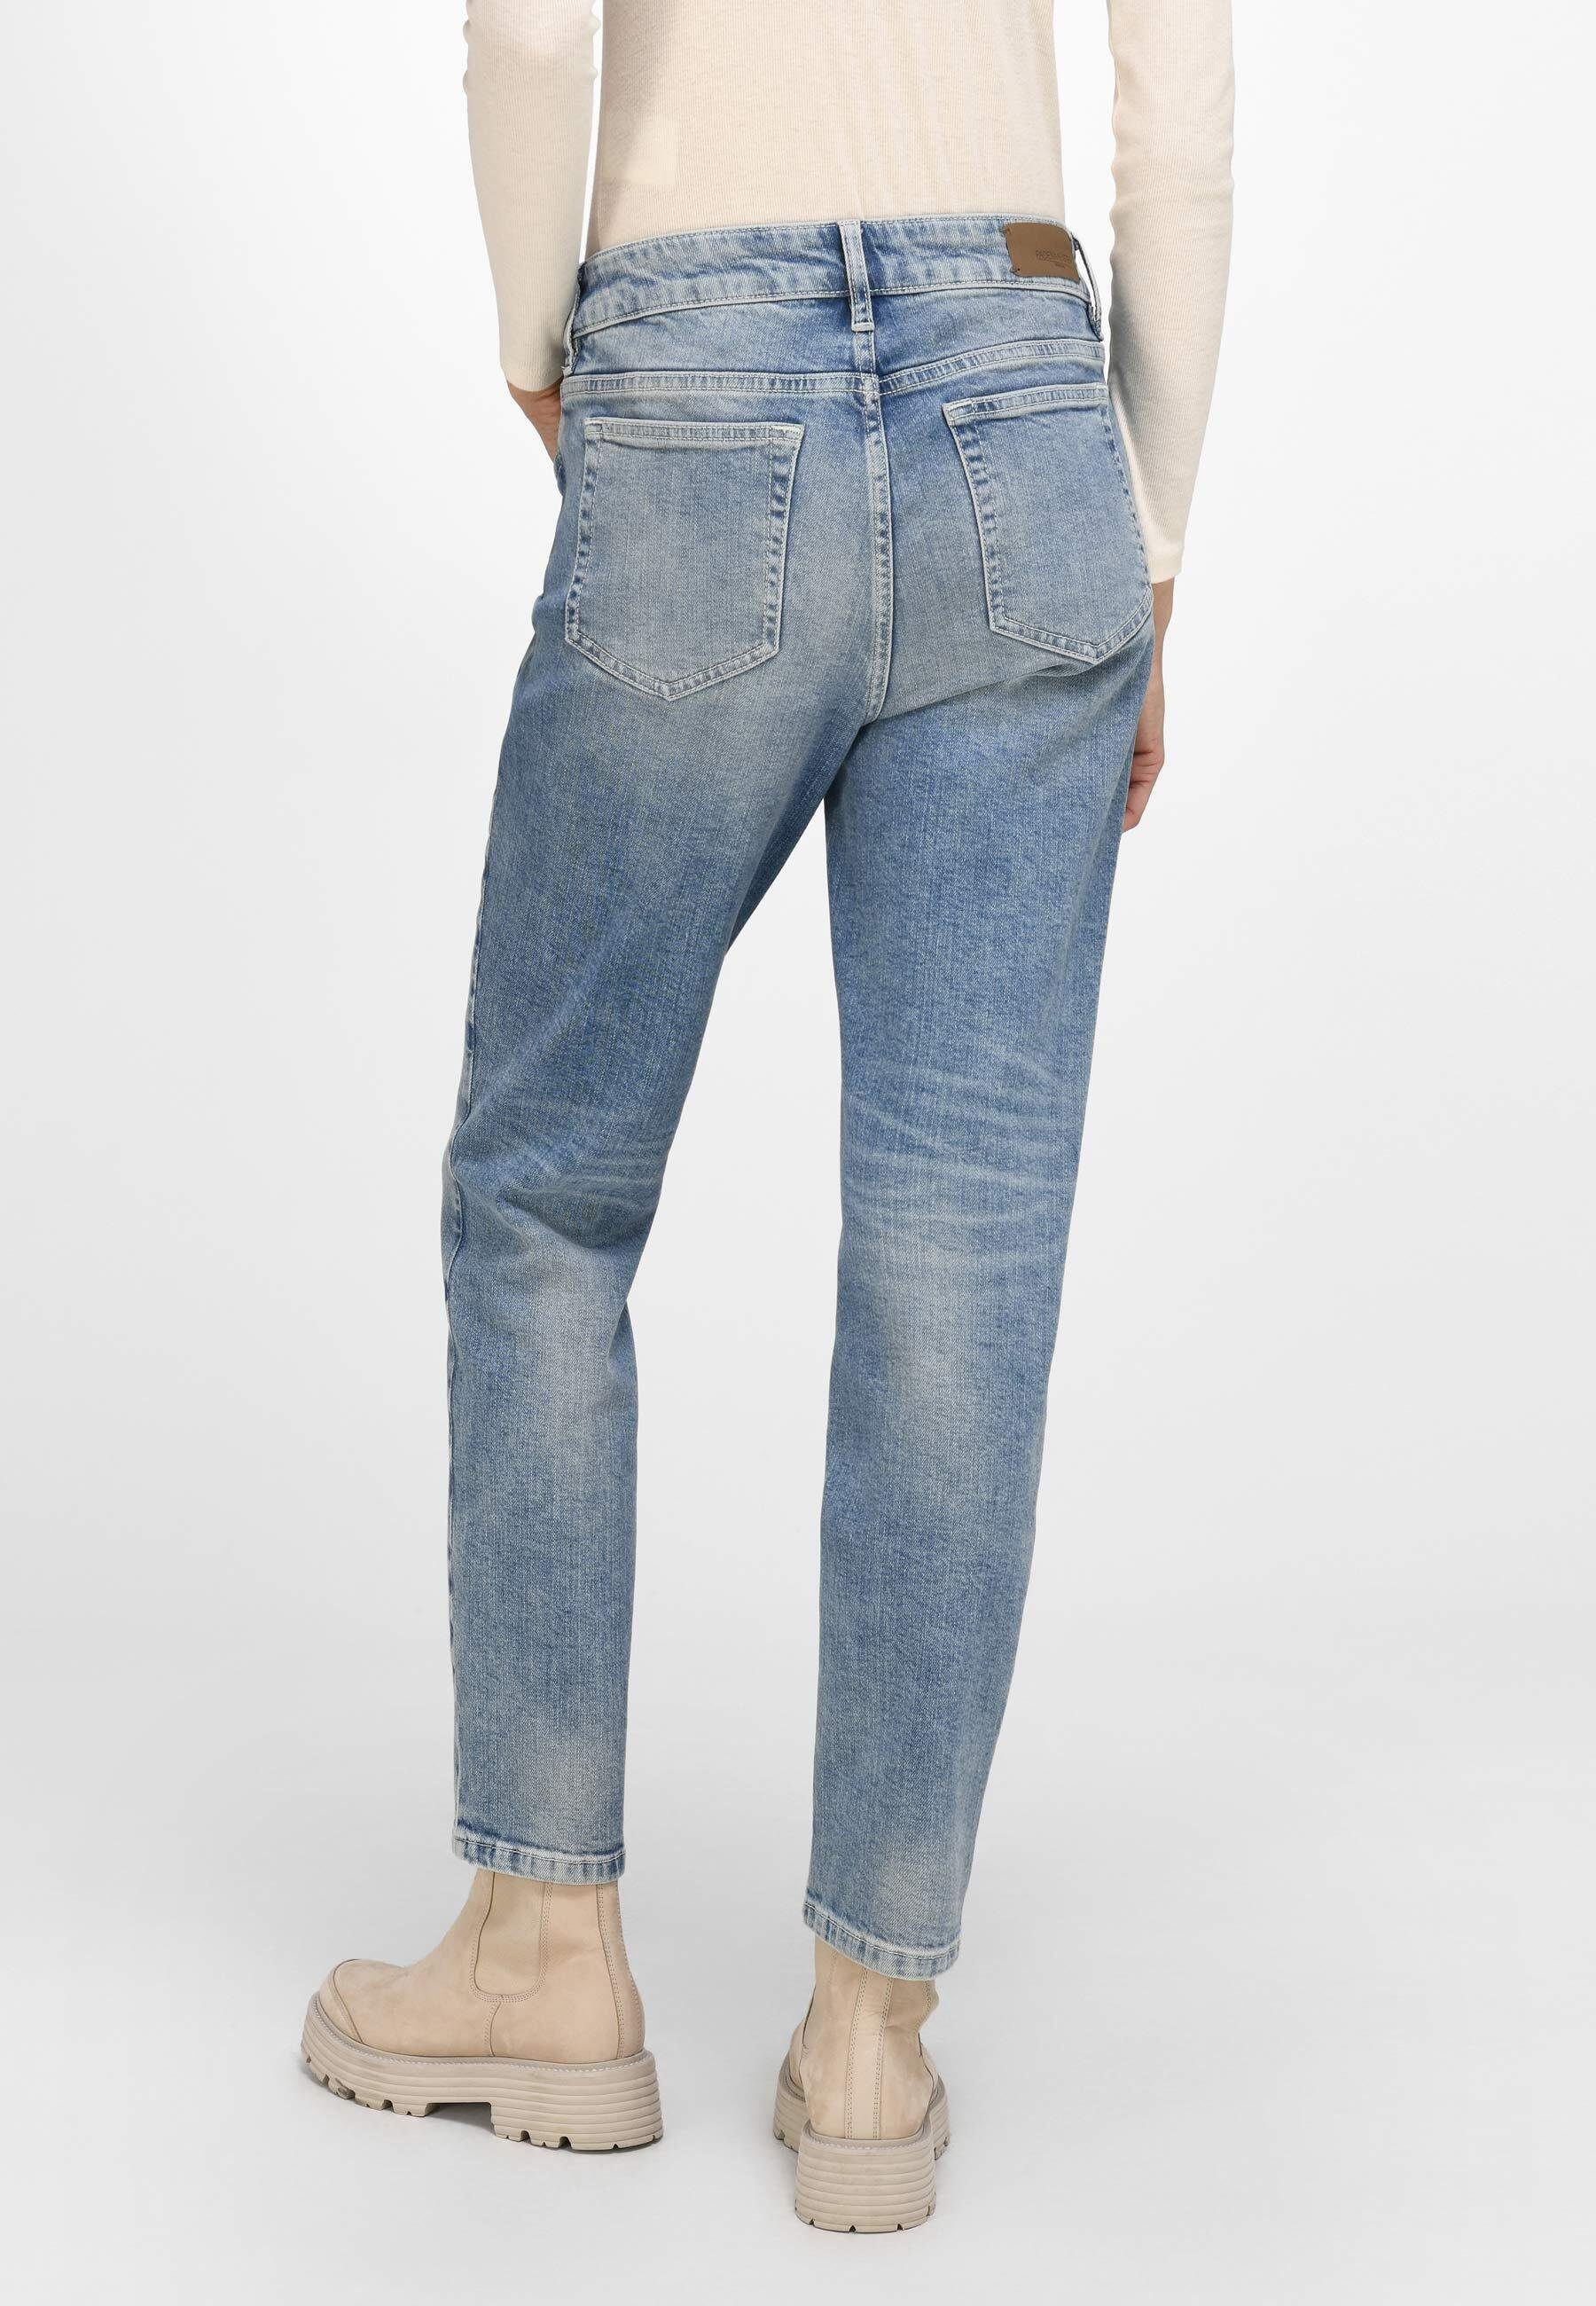 cotton Fadenmeister Berlin 5-Pocket-Jeans